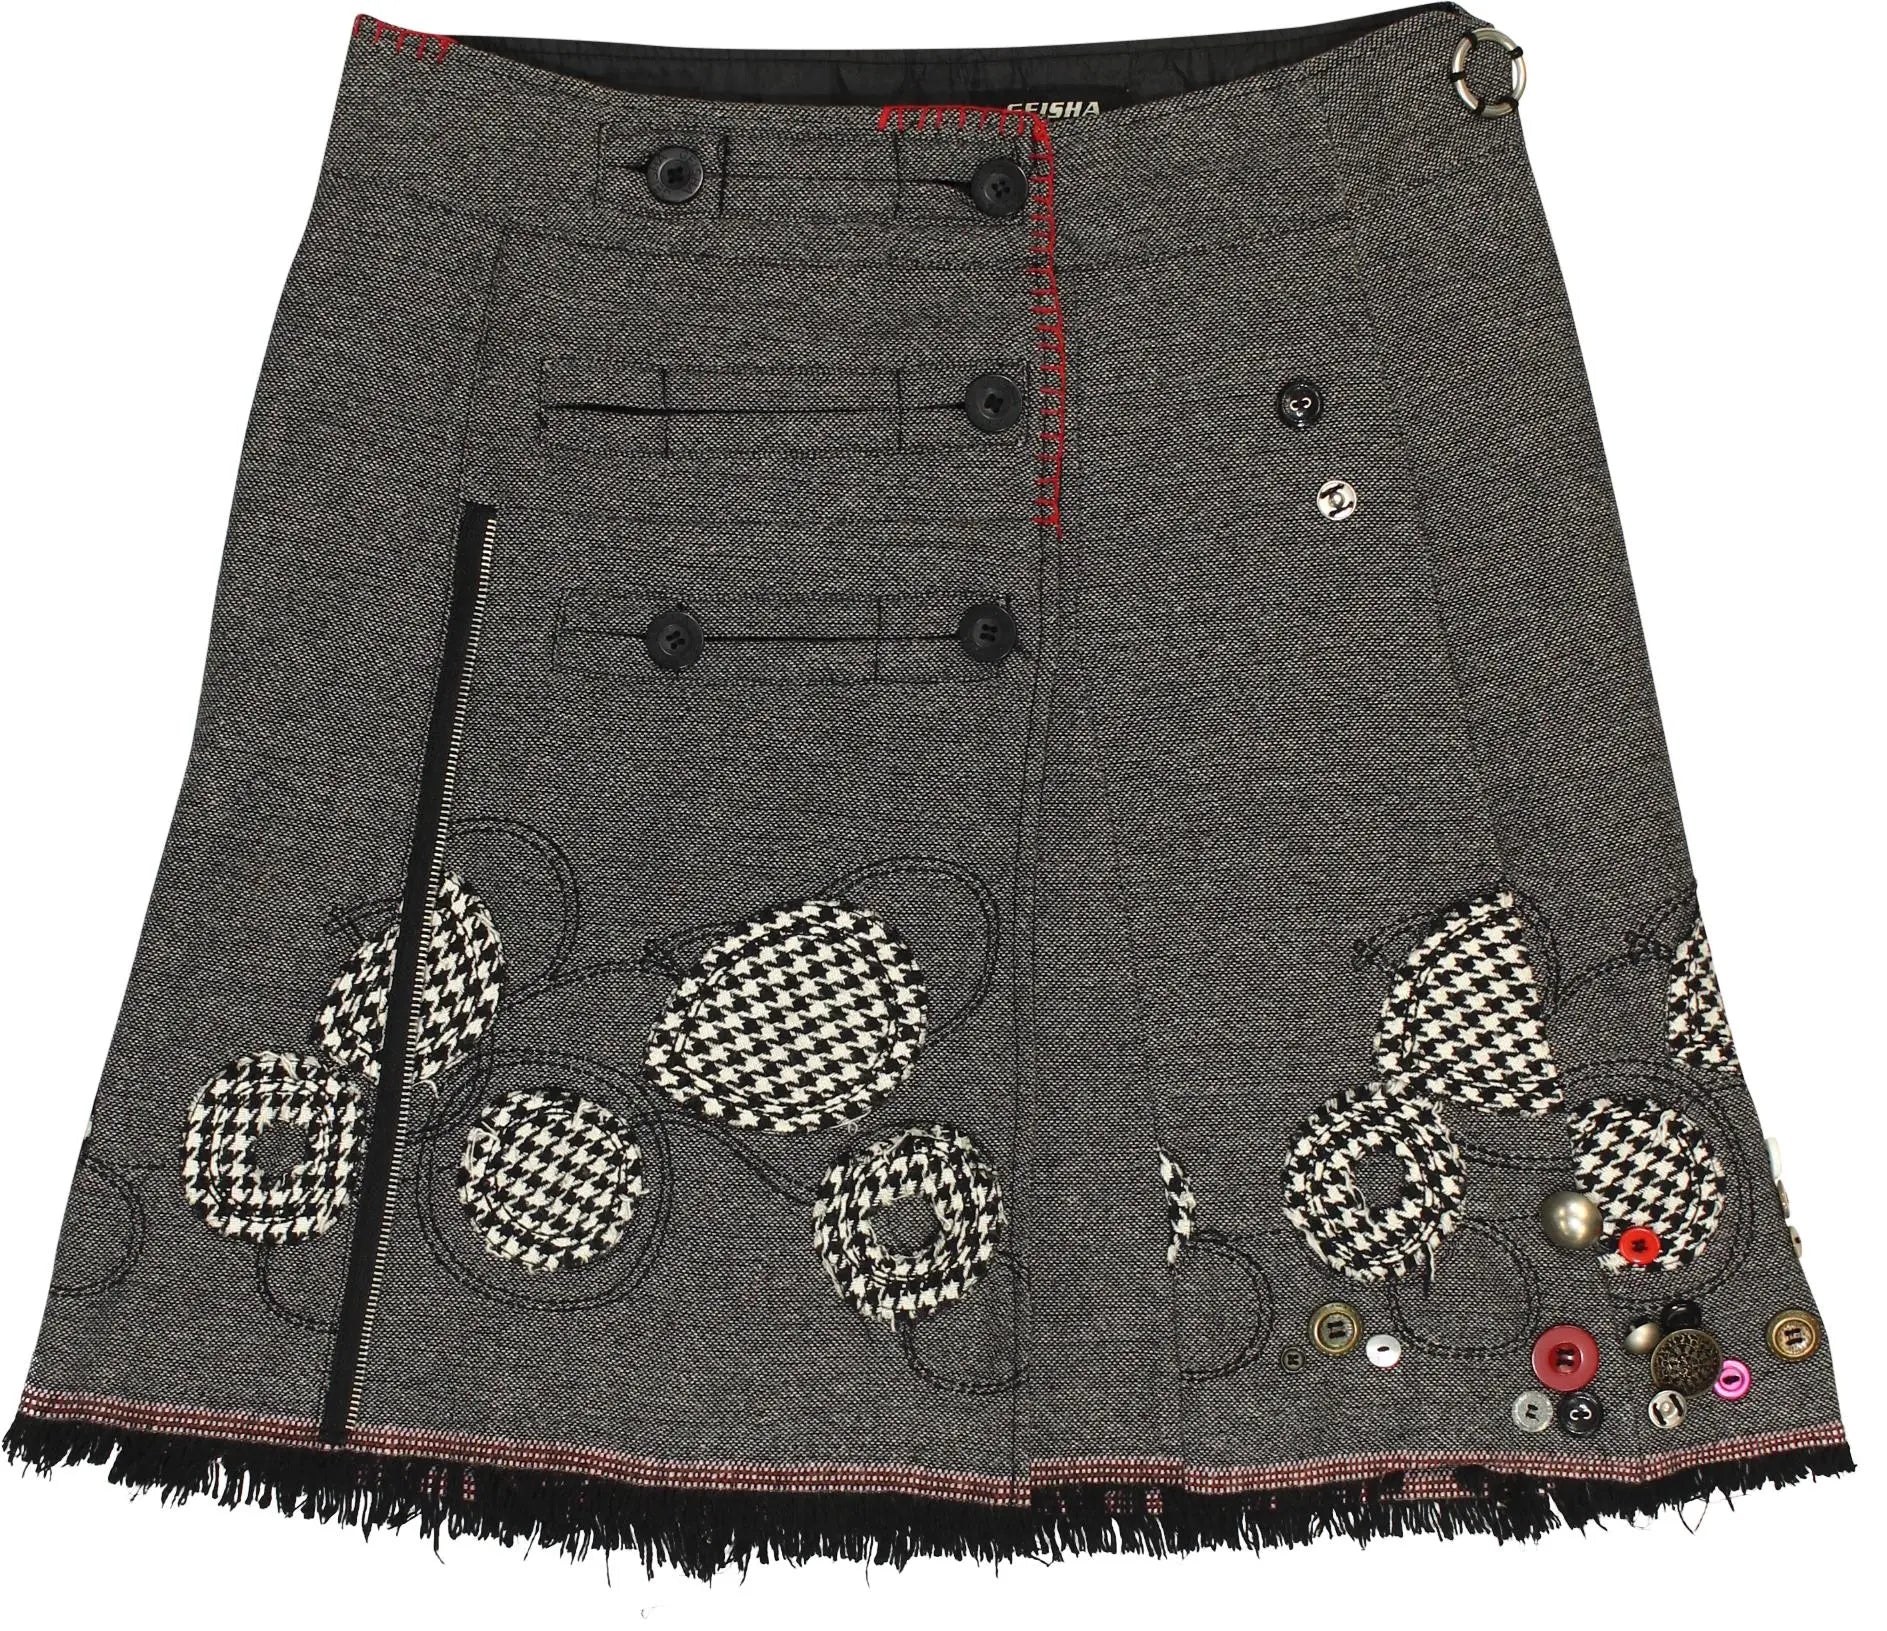 Geisha - Midi Skirt- ThriftTale.com - Vintage and second handclothing